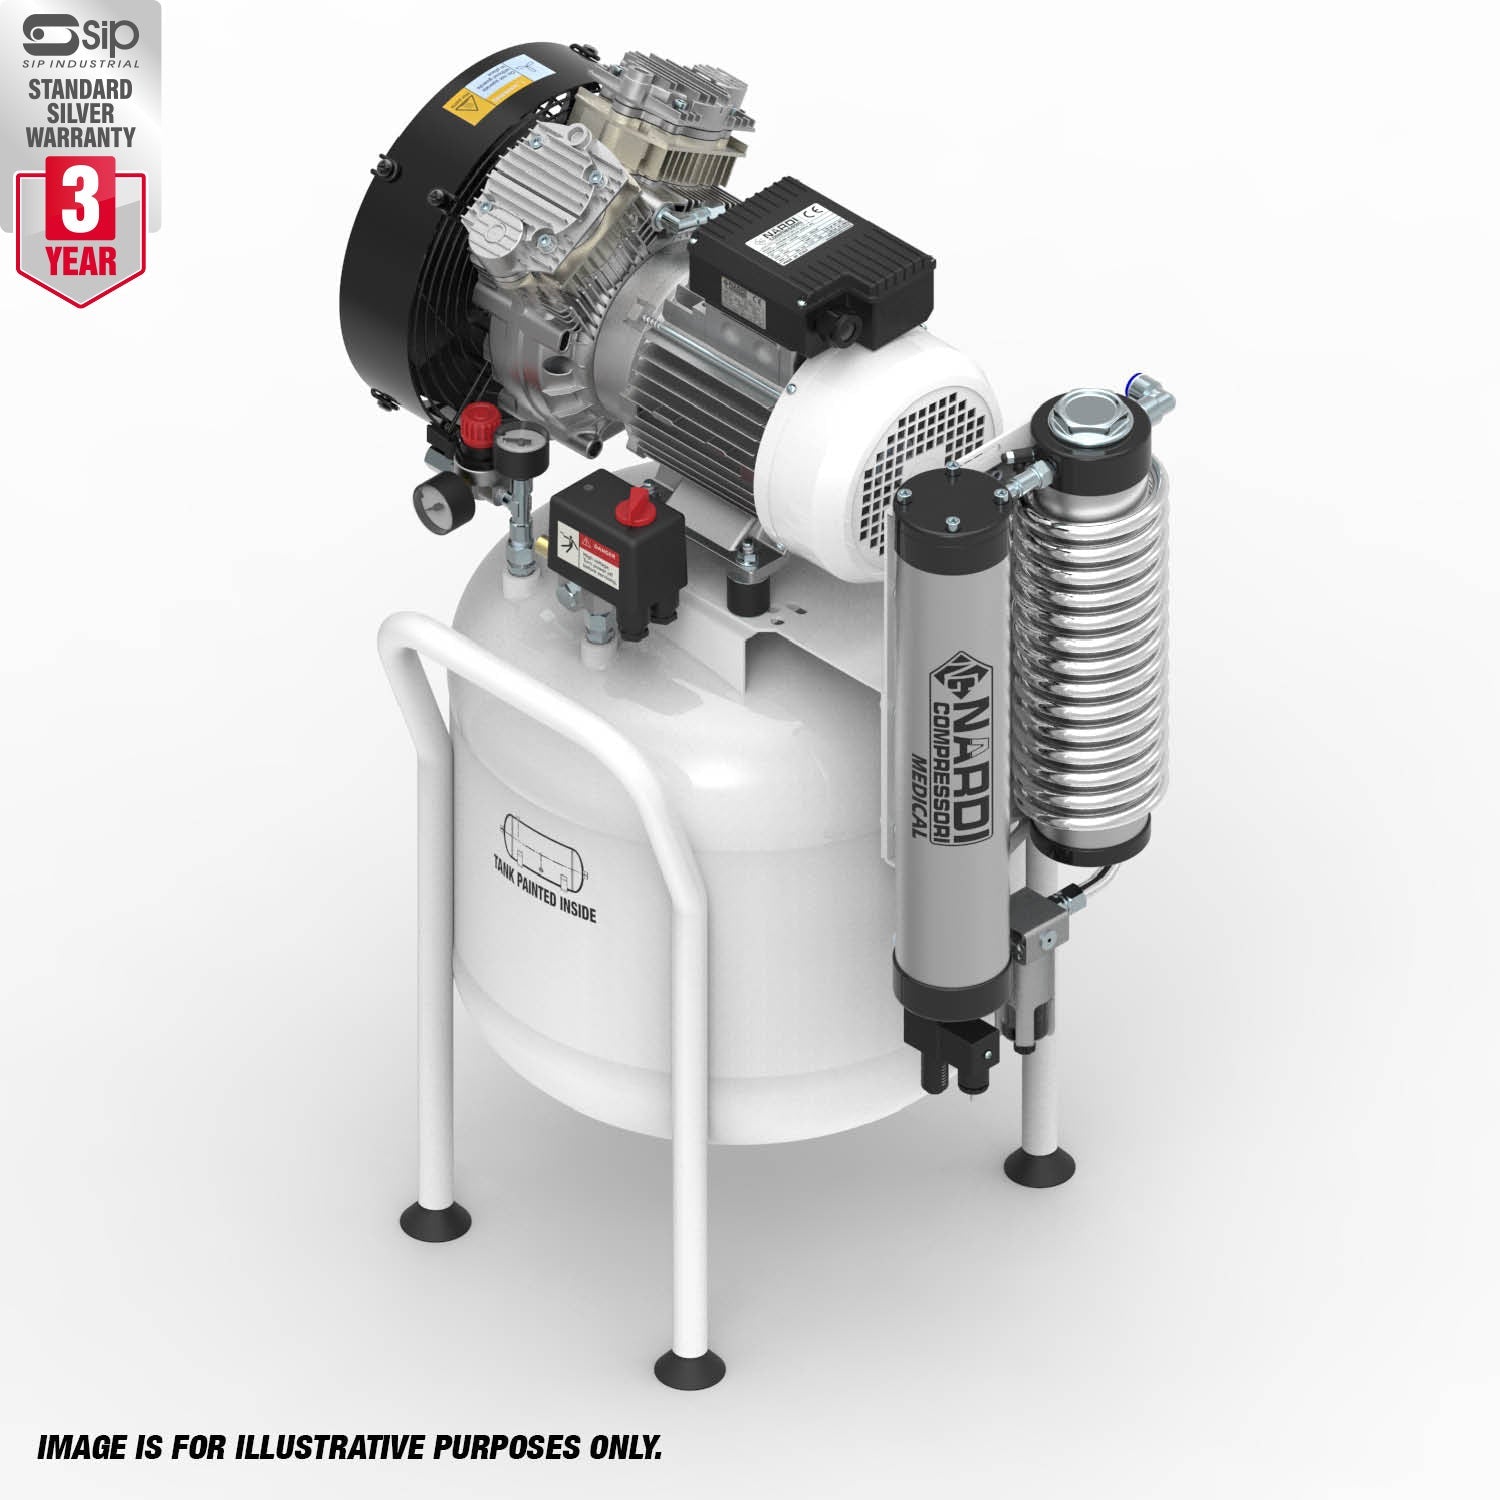 NARDI EXTREME 2D 1.50HP 50ltr Compressor